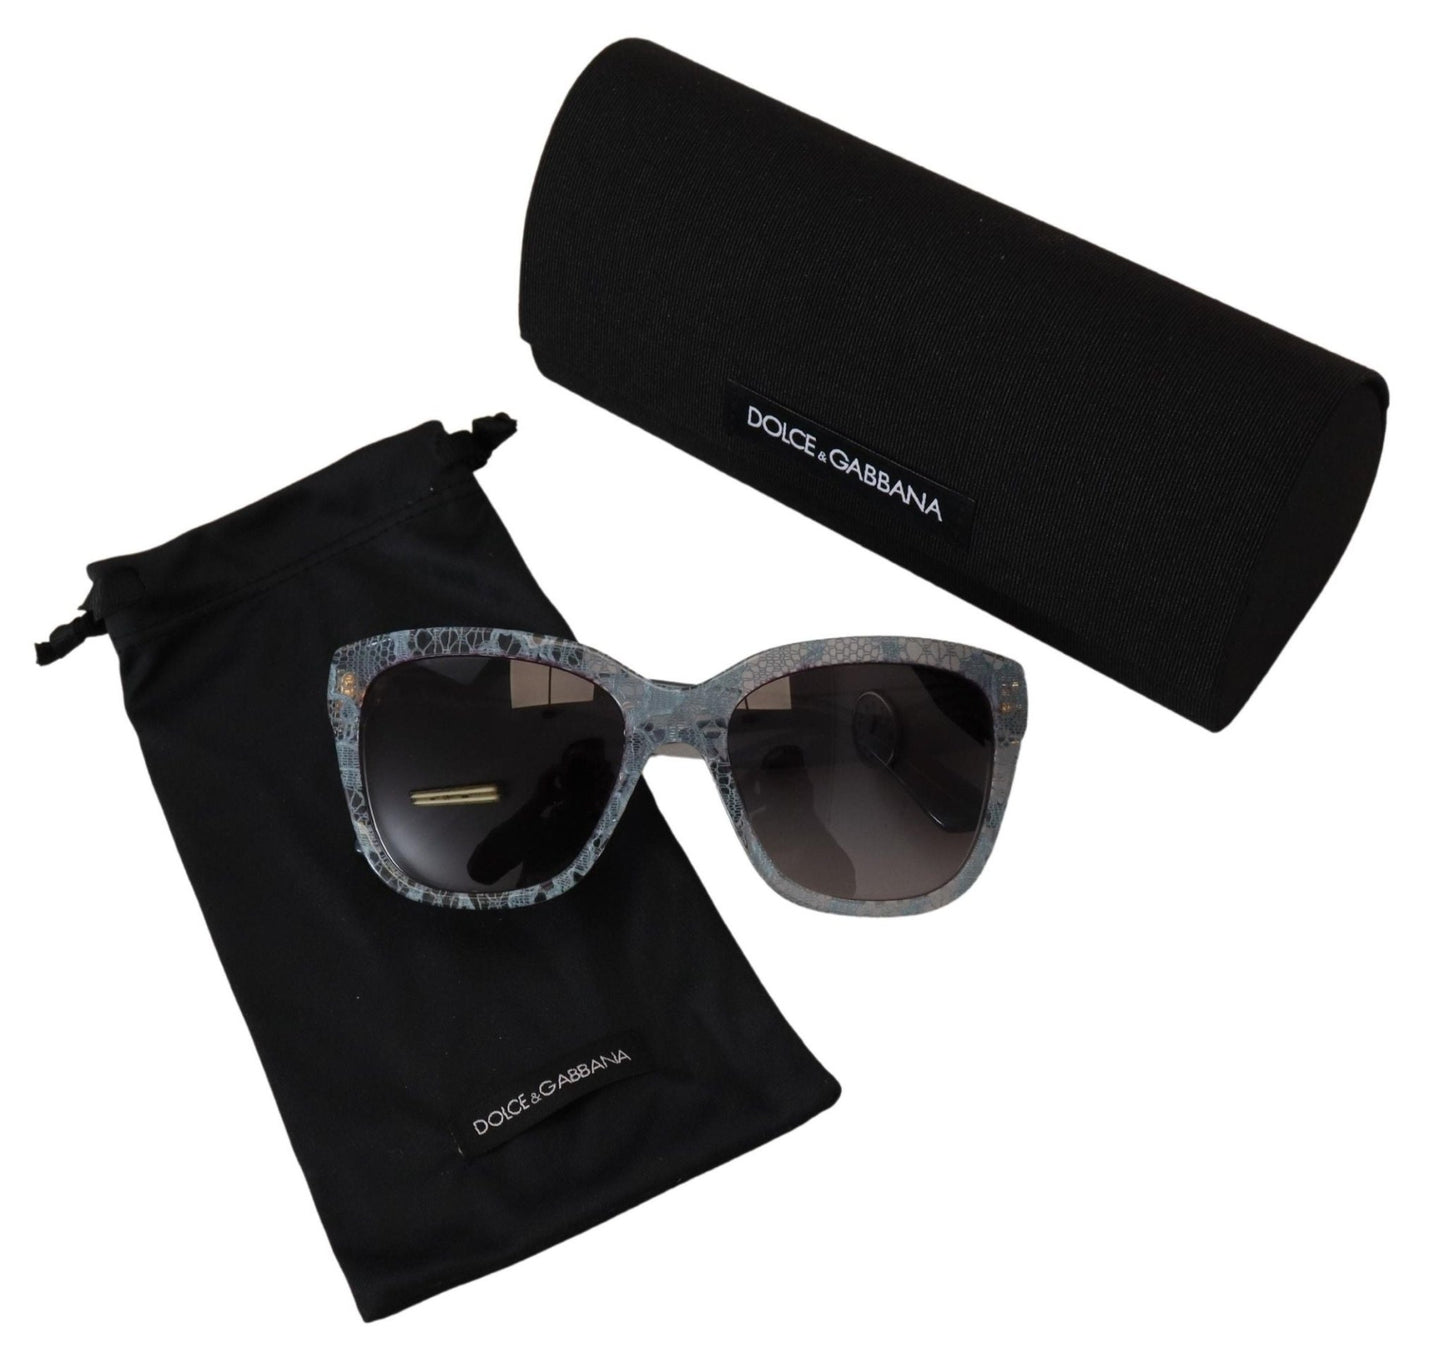 Dolce & Gabbana Blue Lace Acetate Rectangle Shades DG4226 Sunglasses